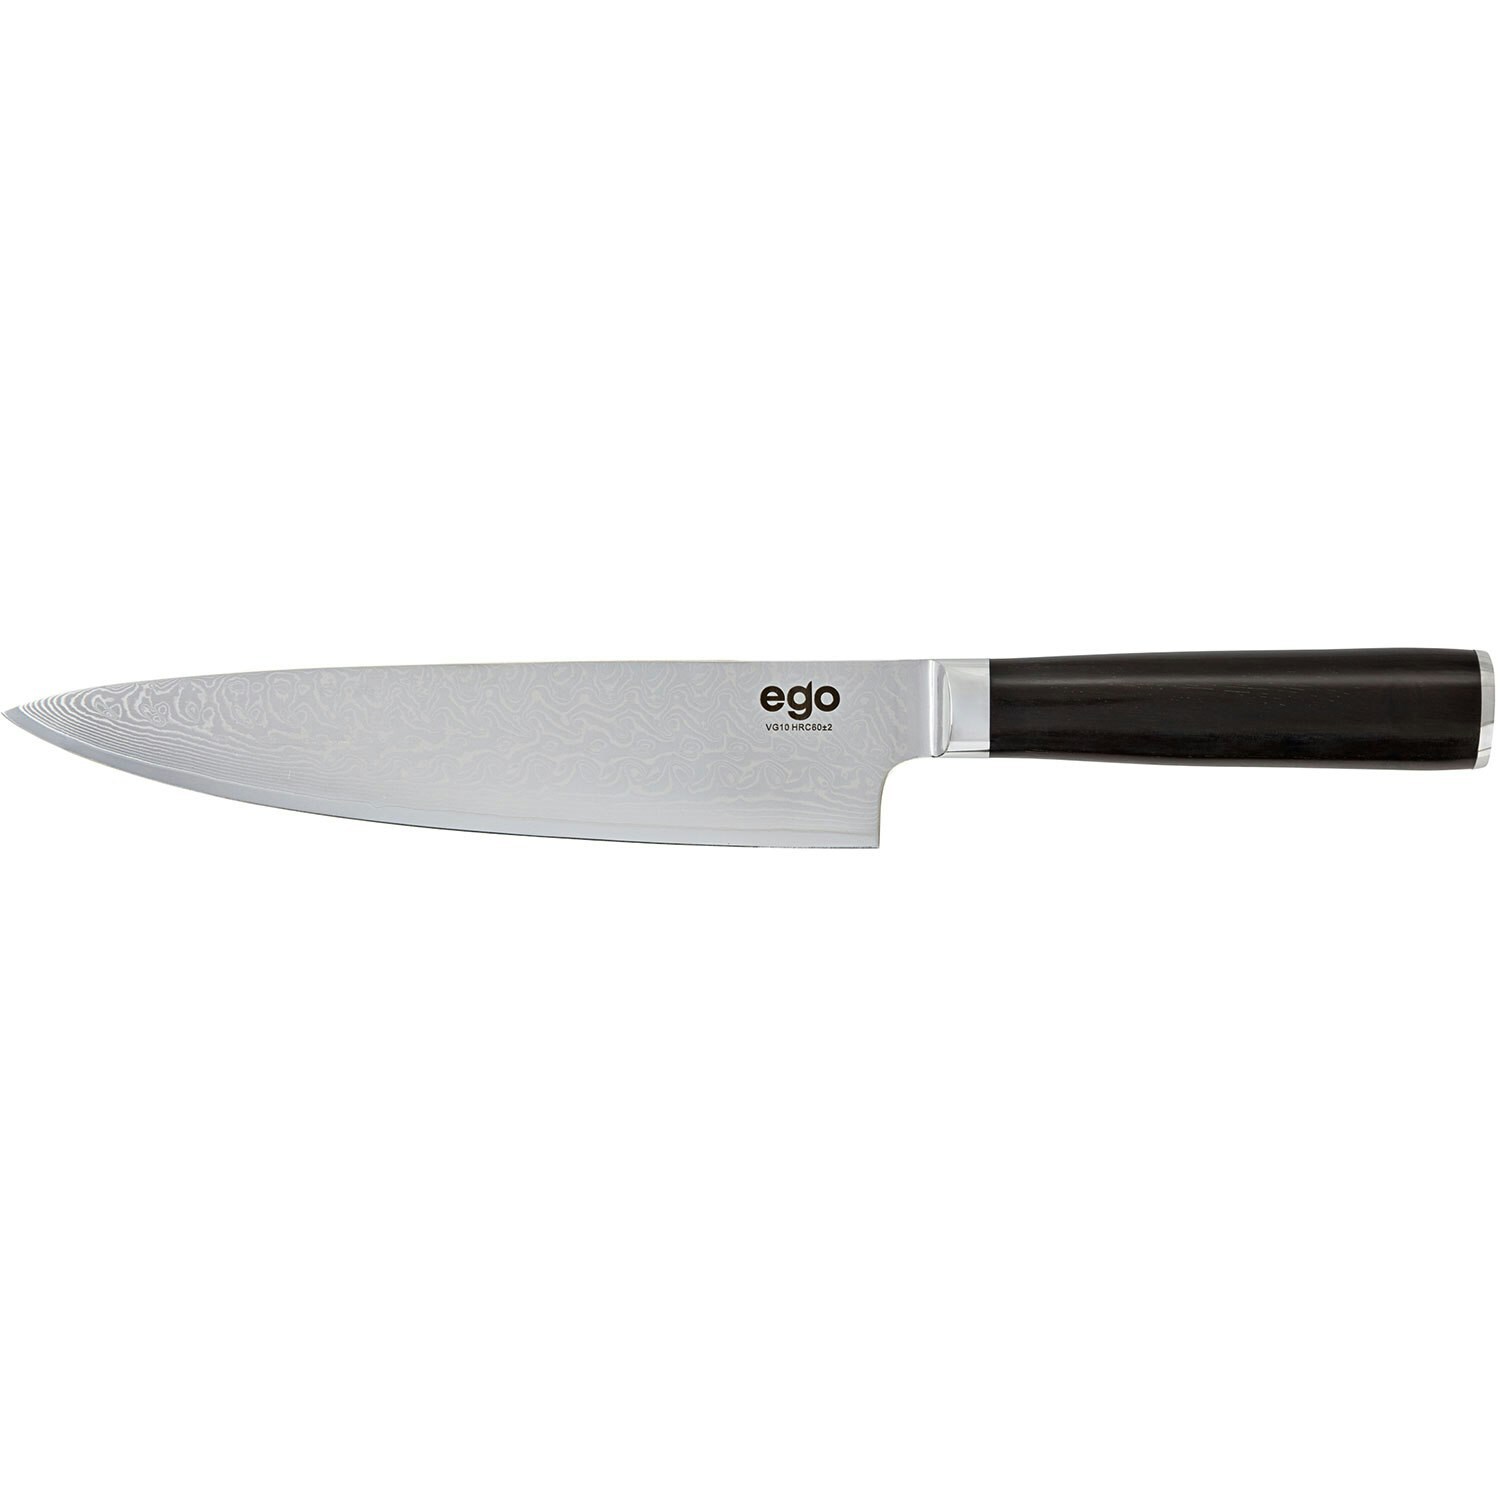 https://royaldesign.com/image/2/ego-vg-10-chef-knife-20-cm-0